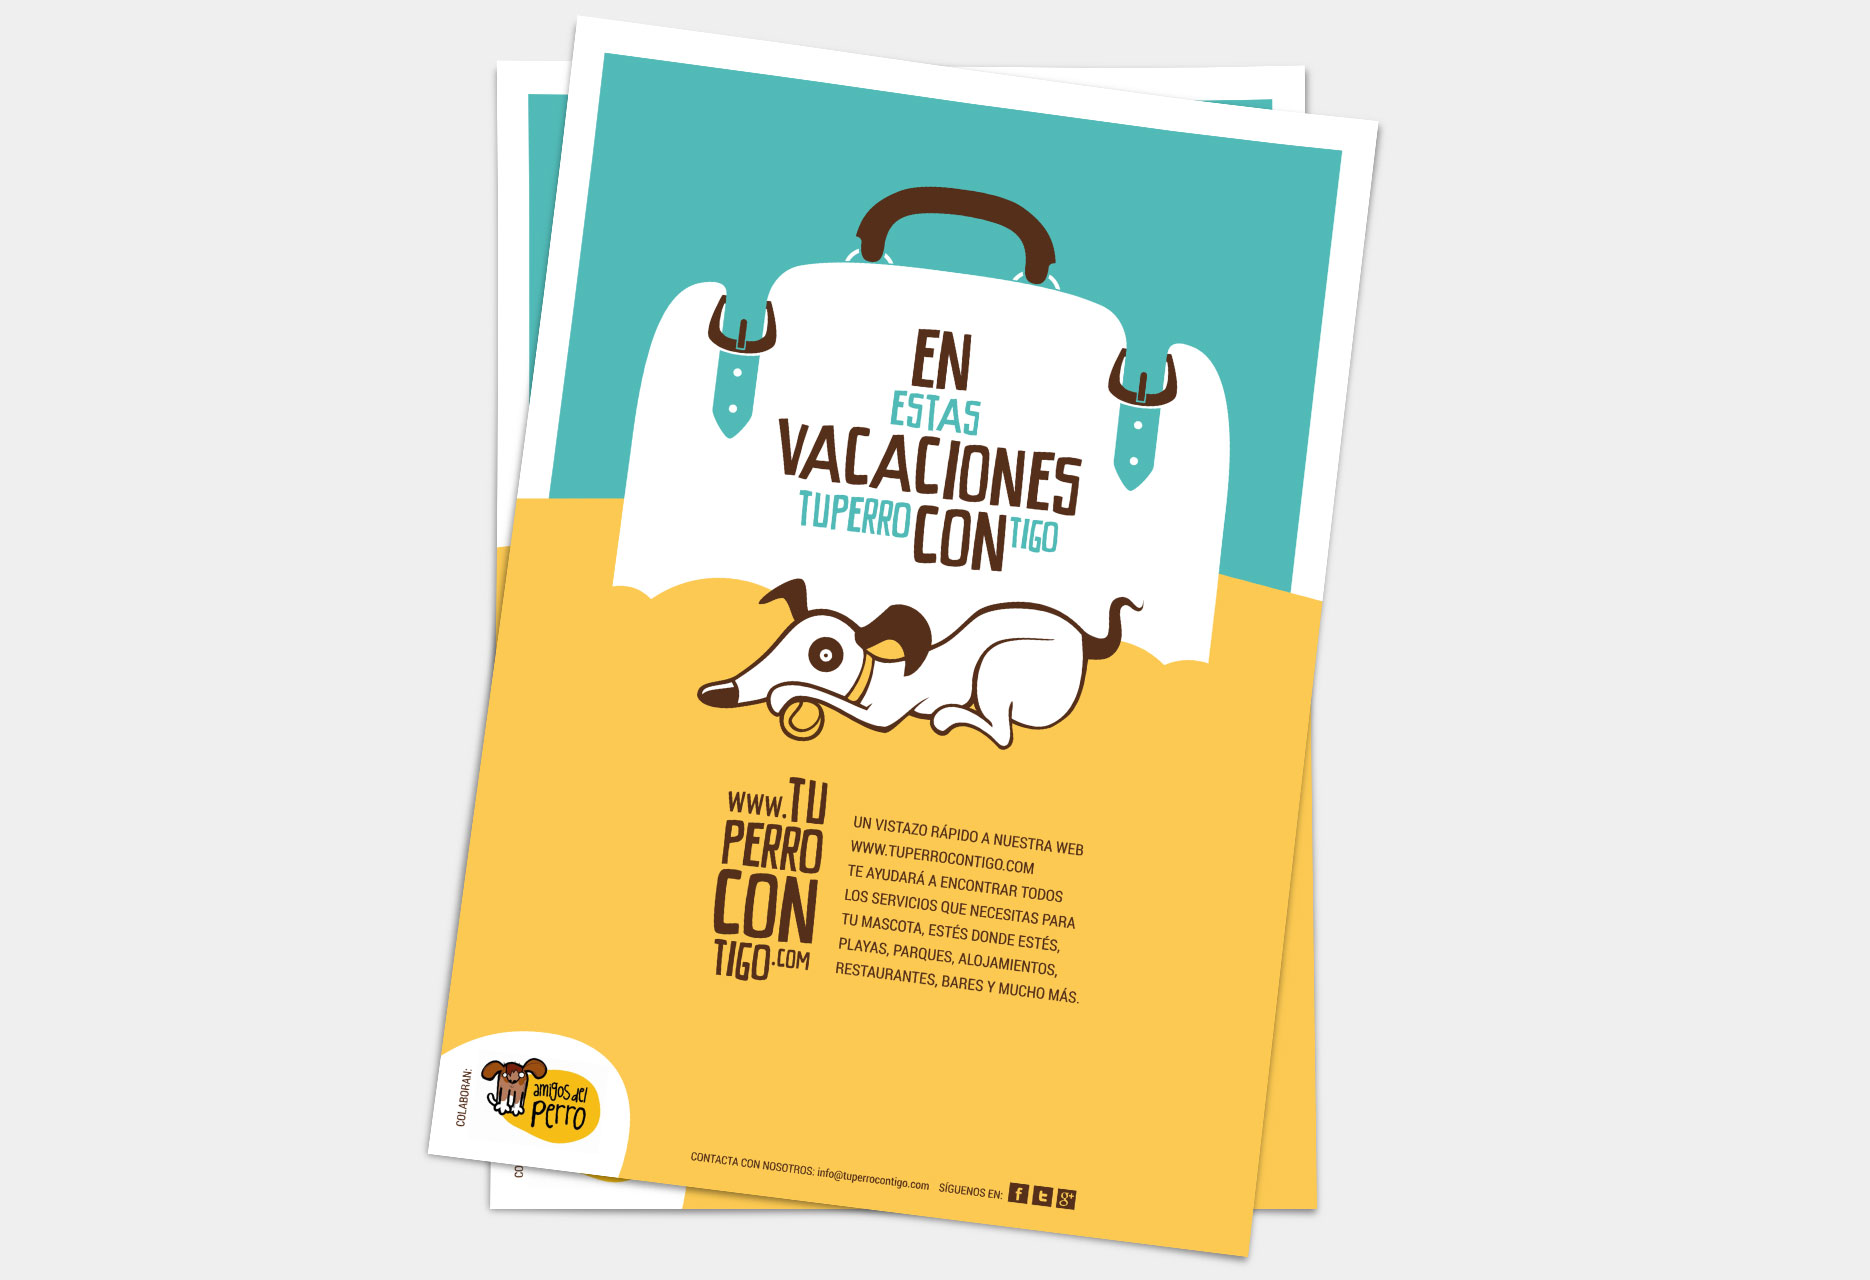 Design of brand and website Tu perro contigo - poster / web design / branding / illustration